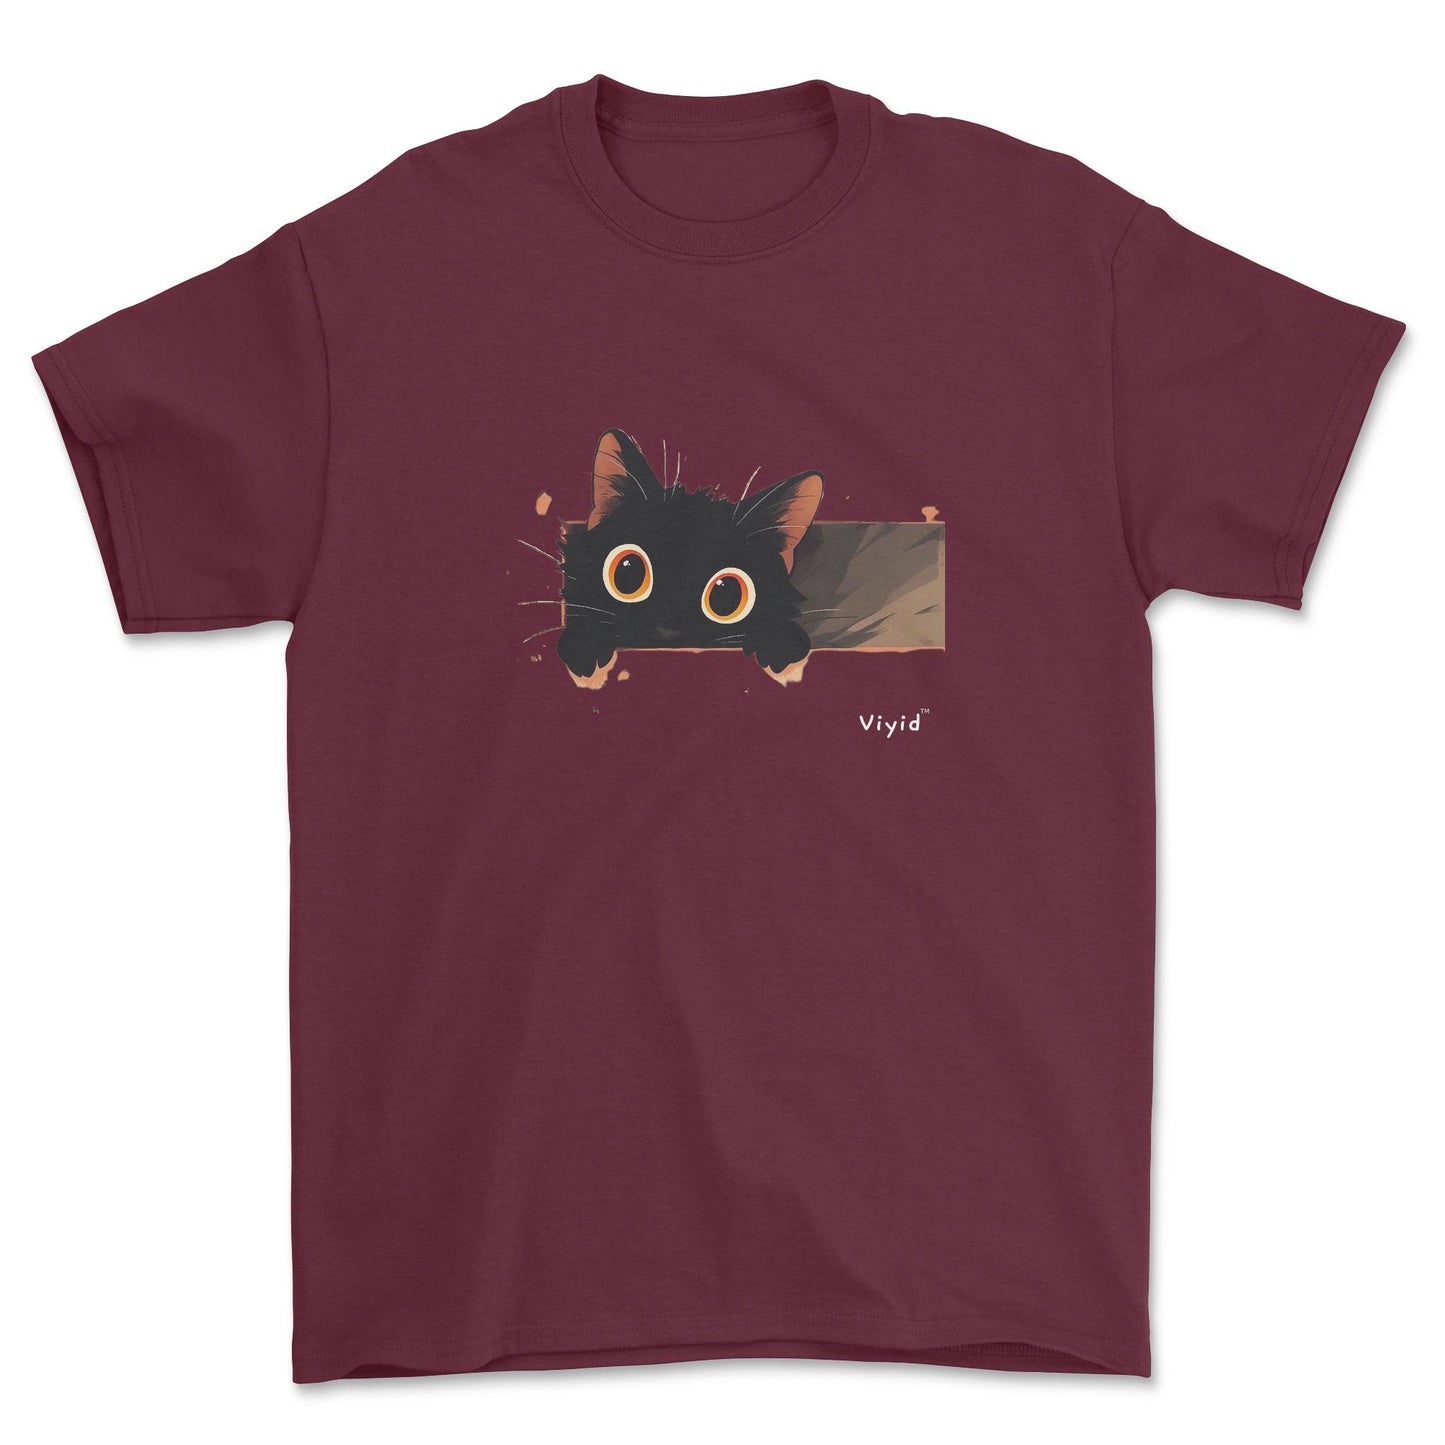 Peeping black cat youth t-shirt maroon